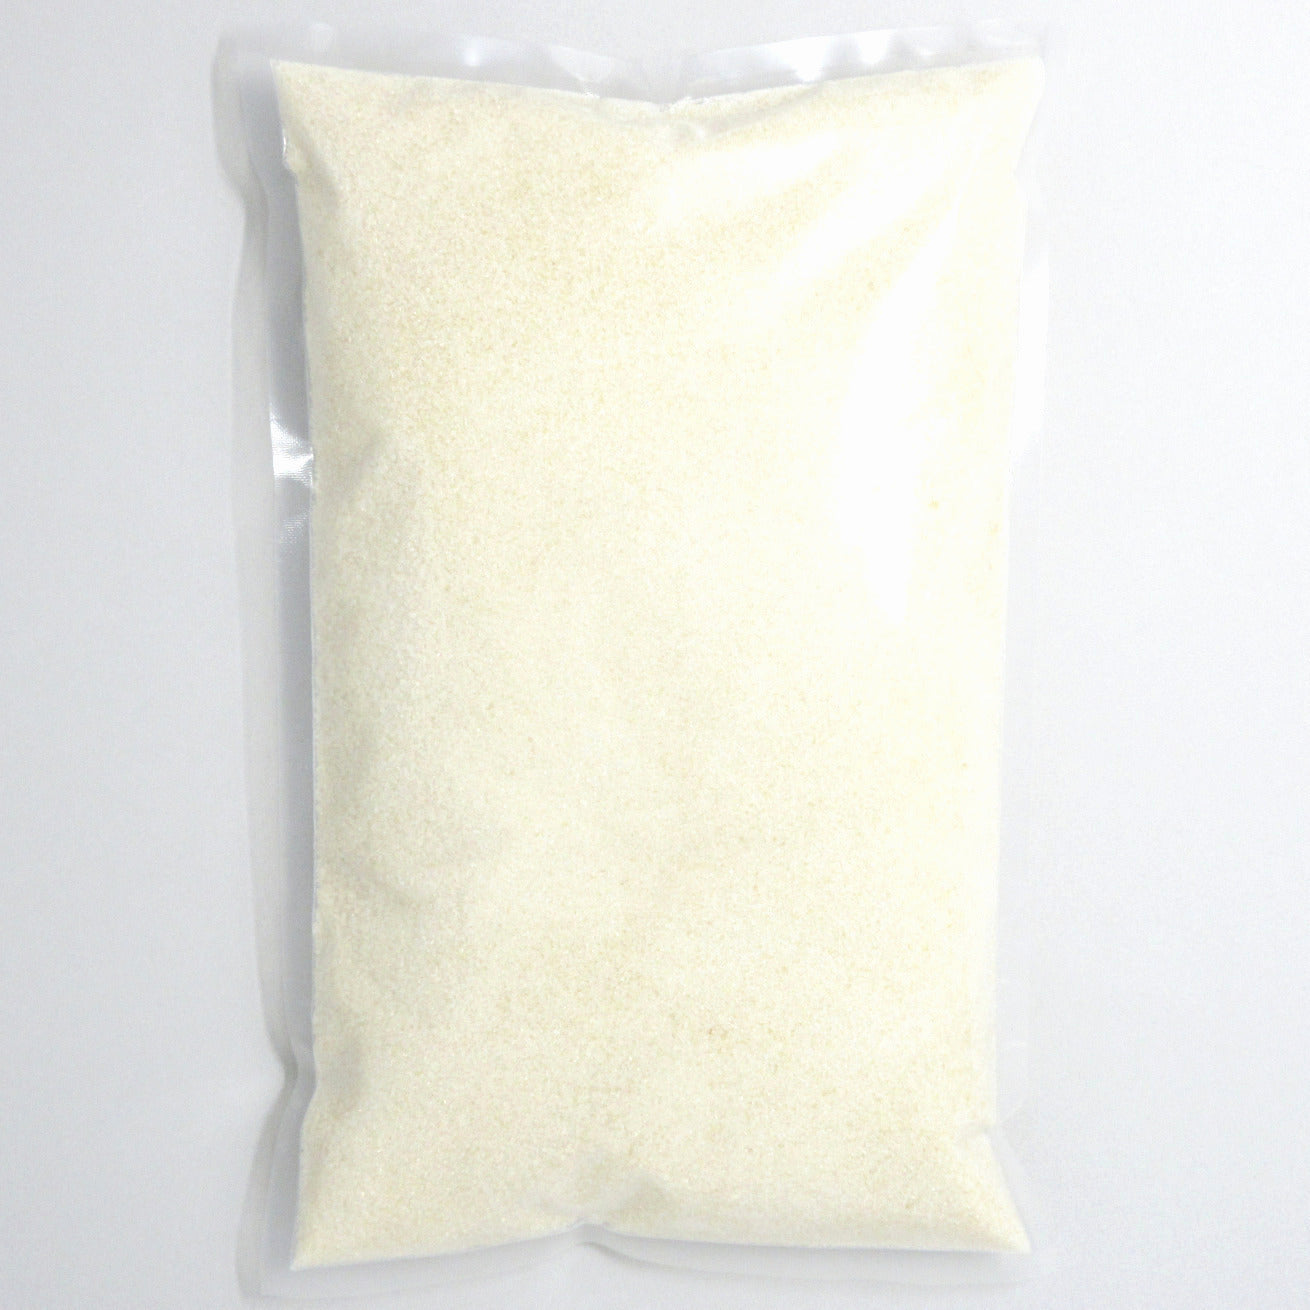 Flour Barrel product image - Organic Cane Sugar